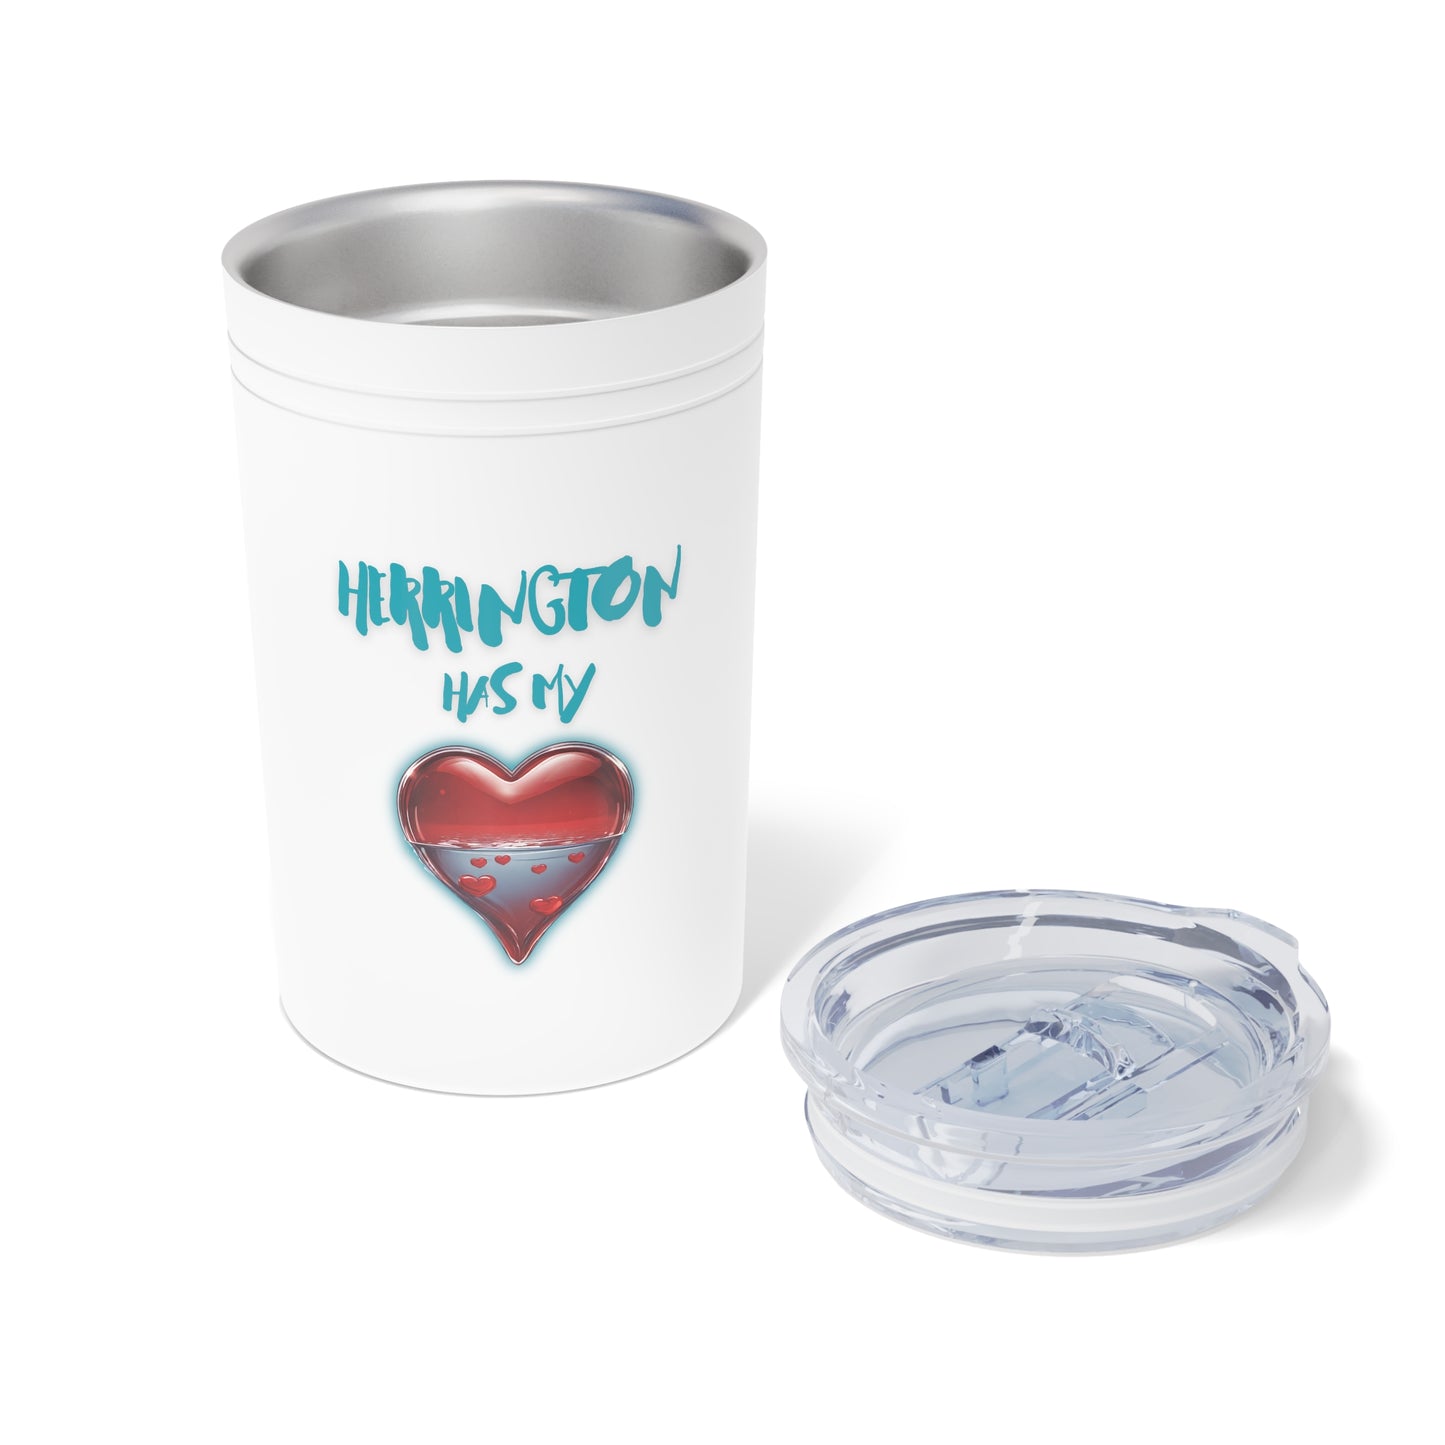 "Herrington Has My Heart" Vacuum Insulated Tumbler/Can Insulator, 11oz